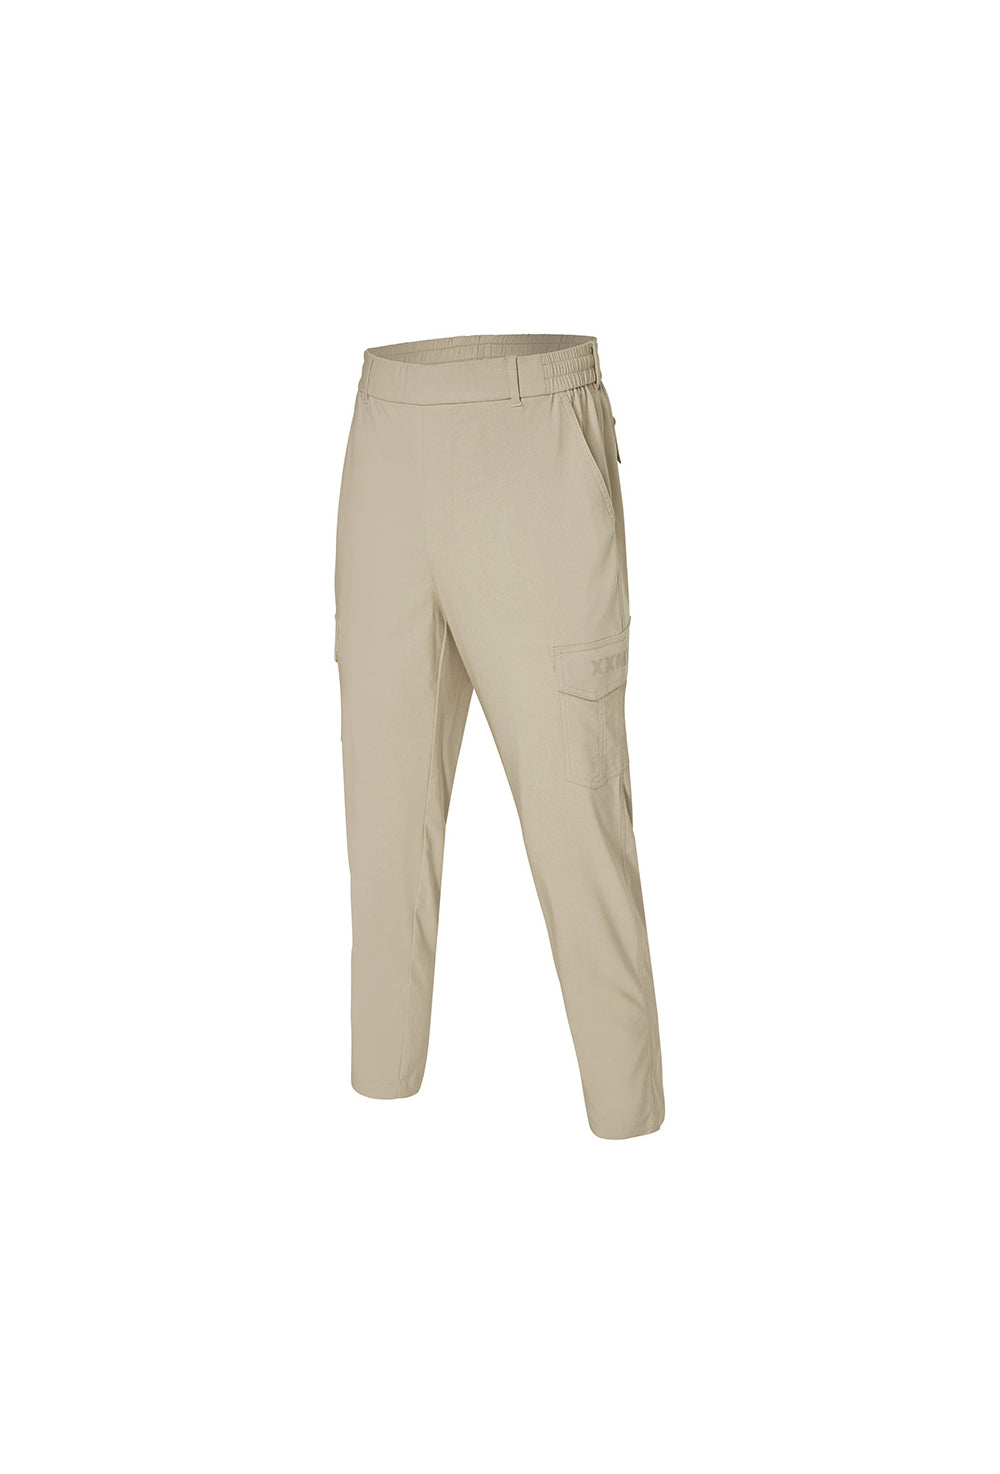 Stretch Out Pocket Pants - Beige